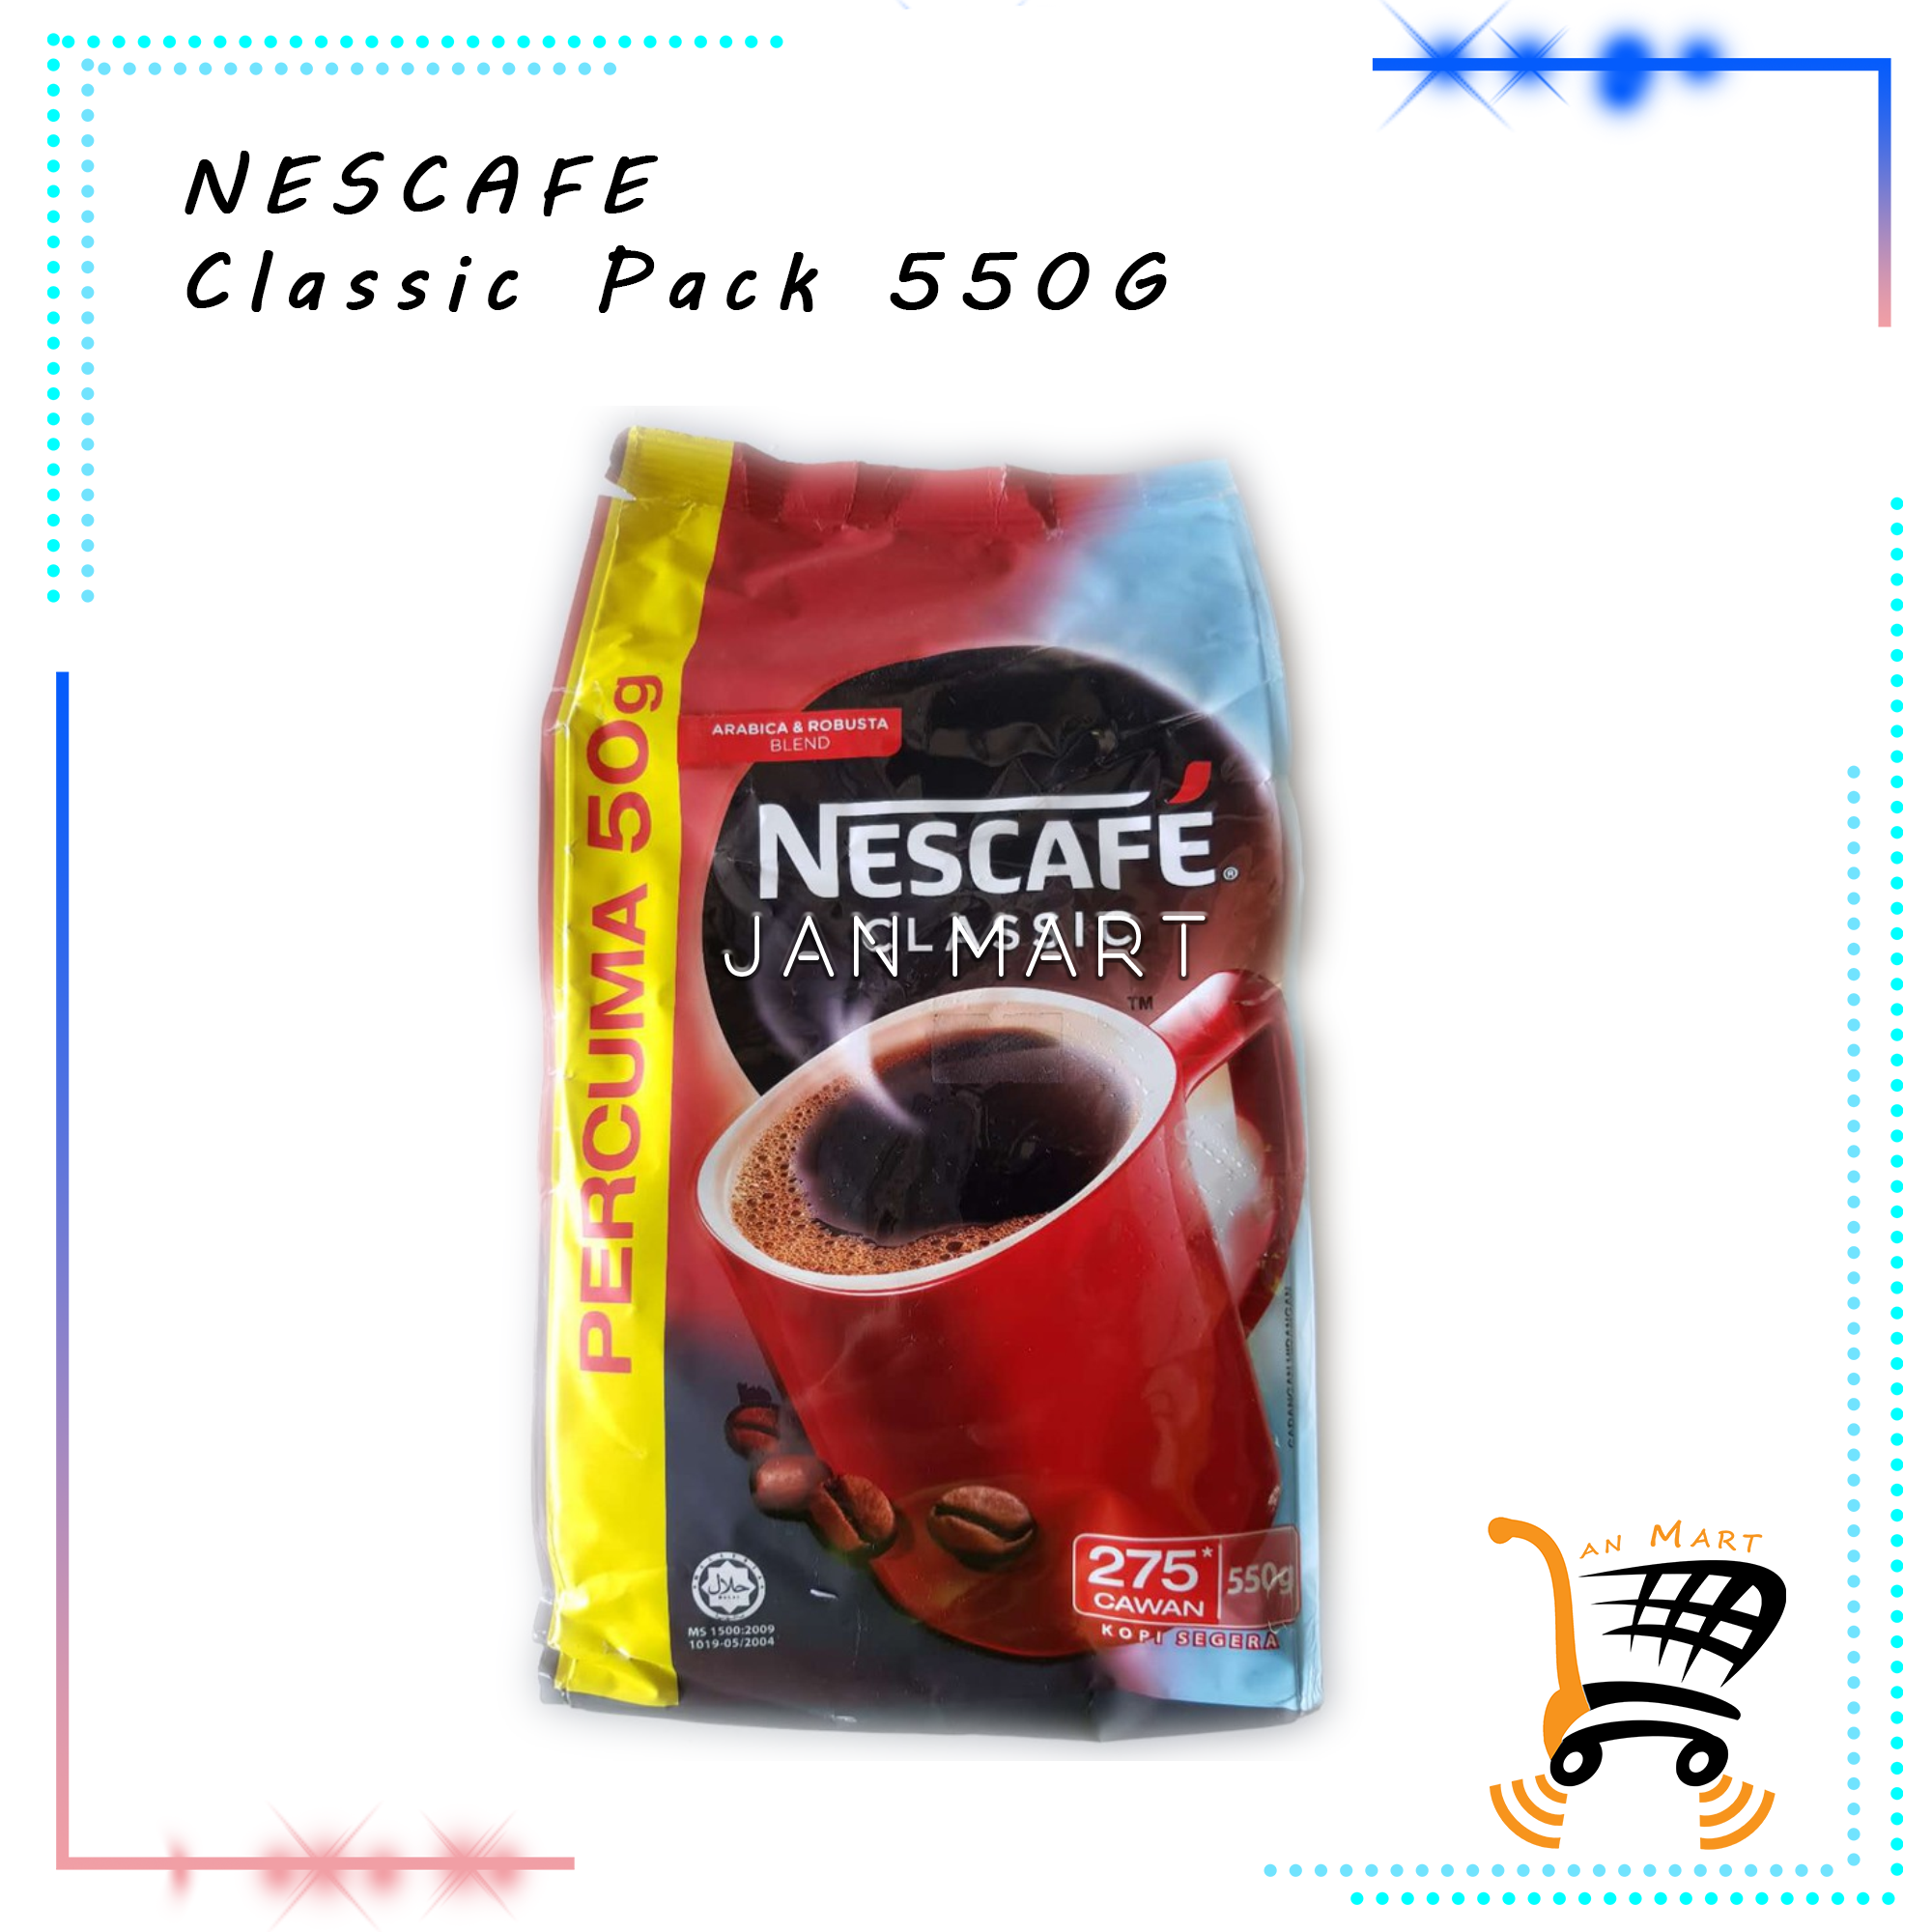 NESCAFE Classic Pack Refill Pack 550G